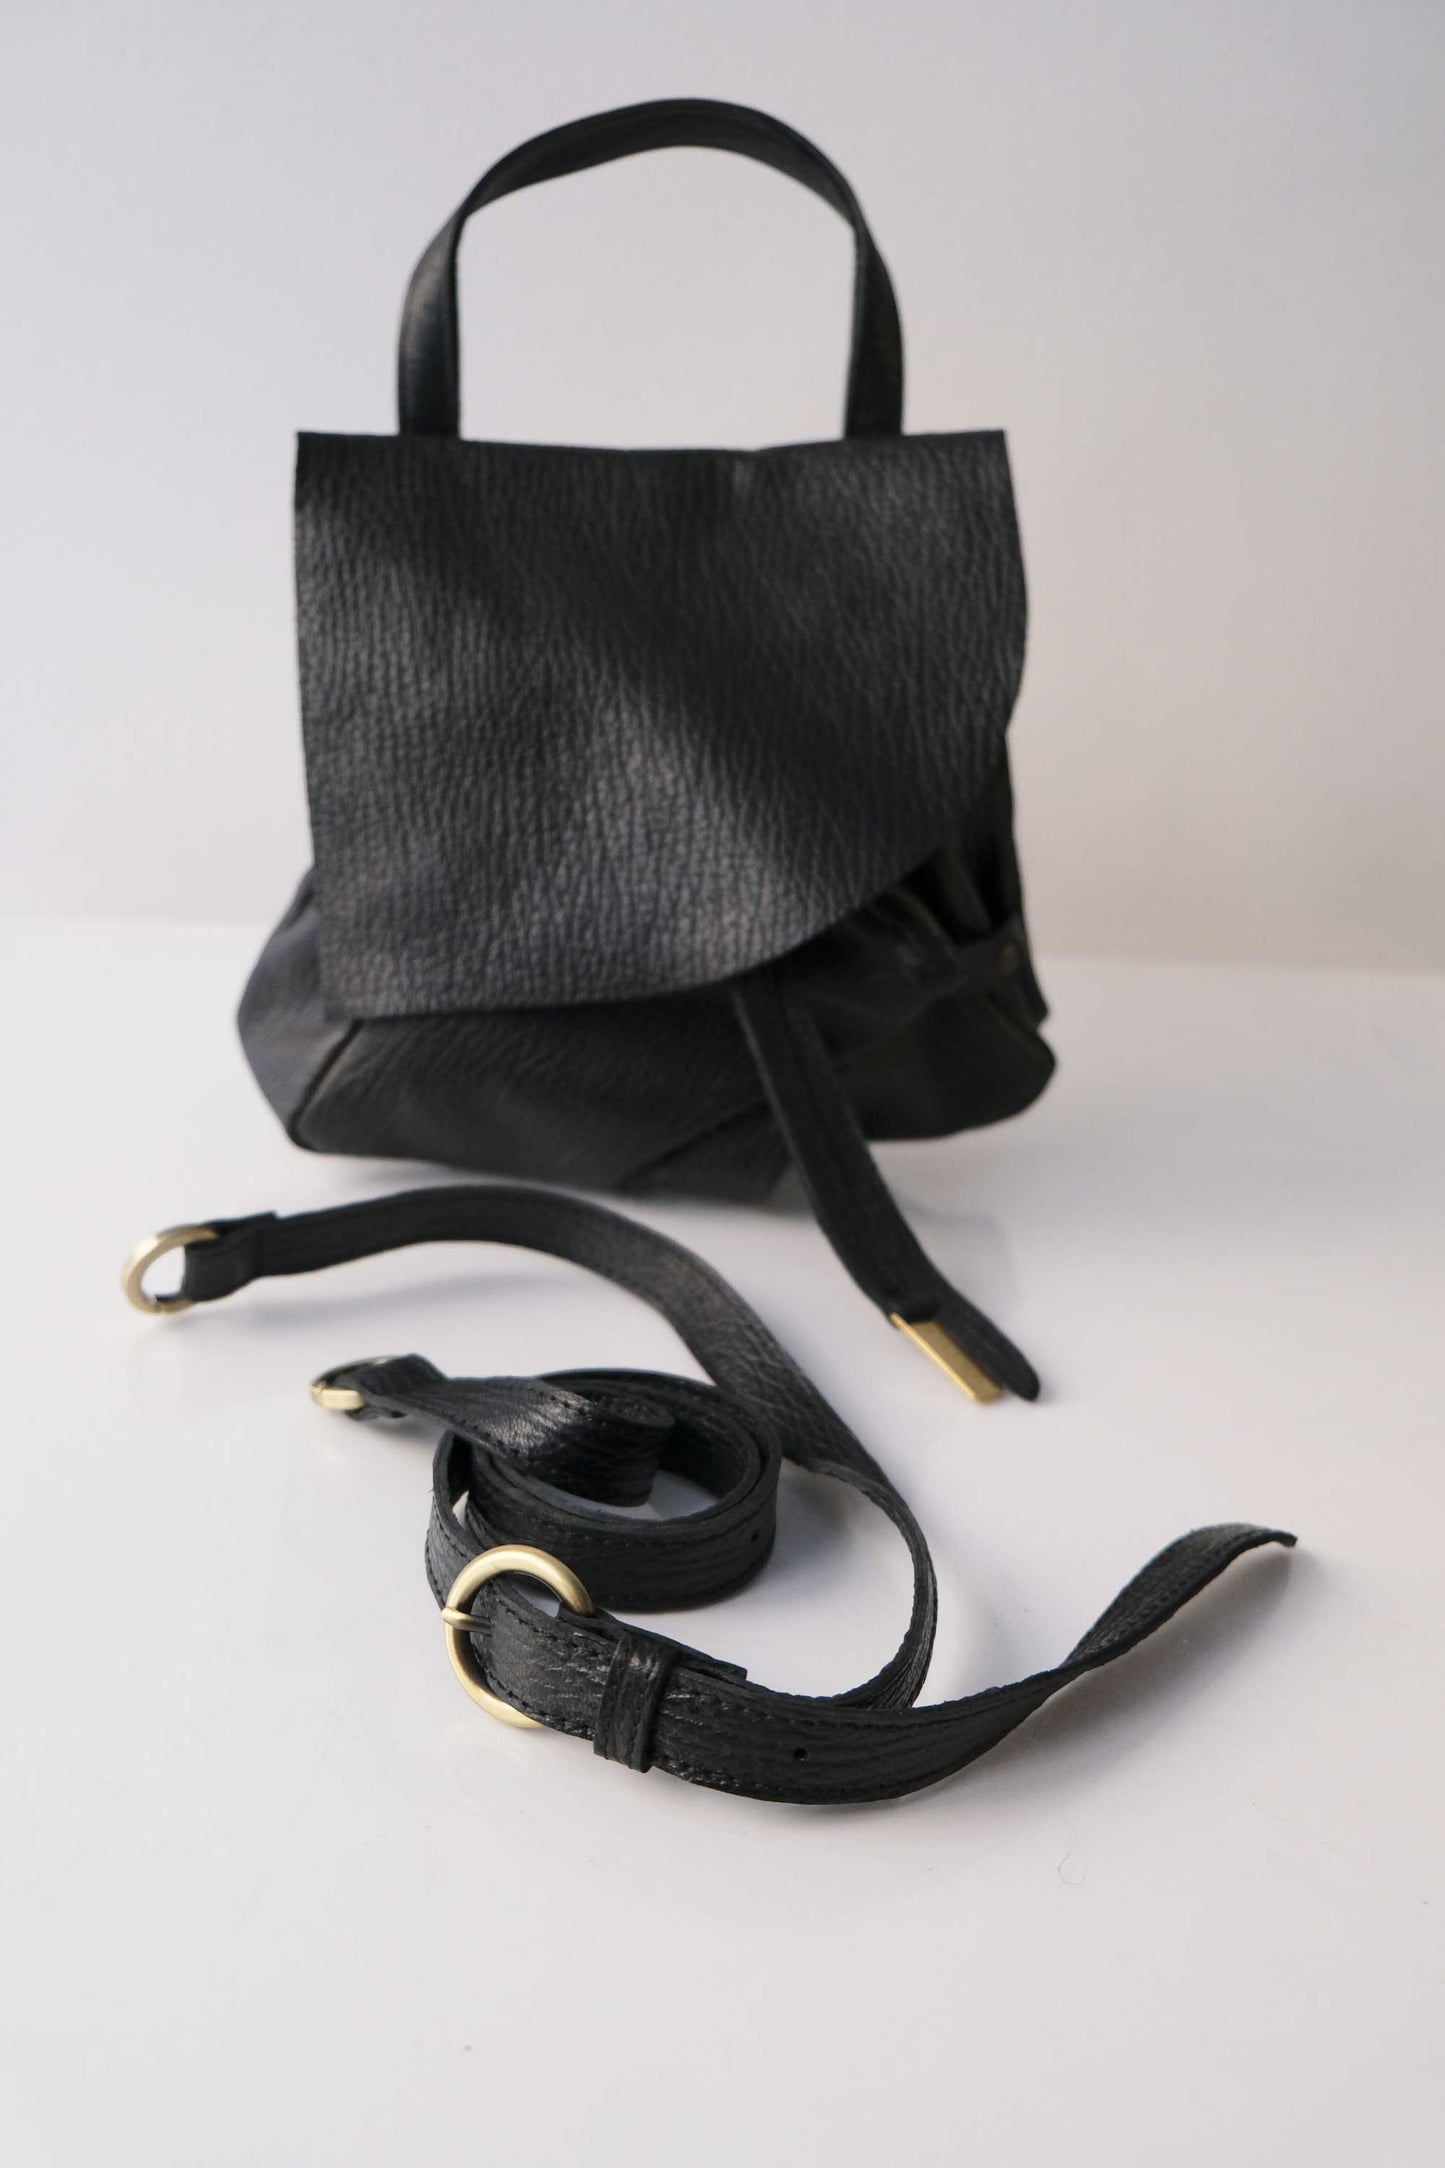 Minu mini bag in shark print black colour